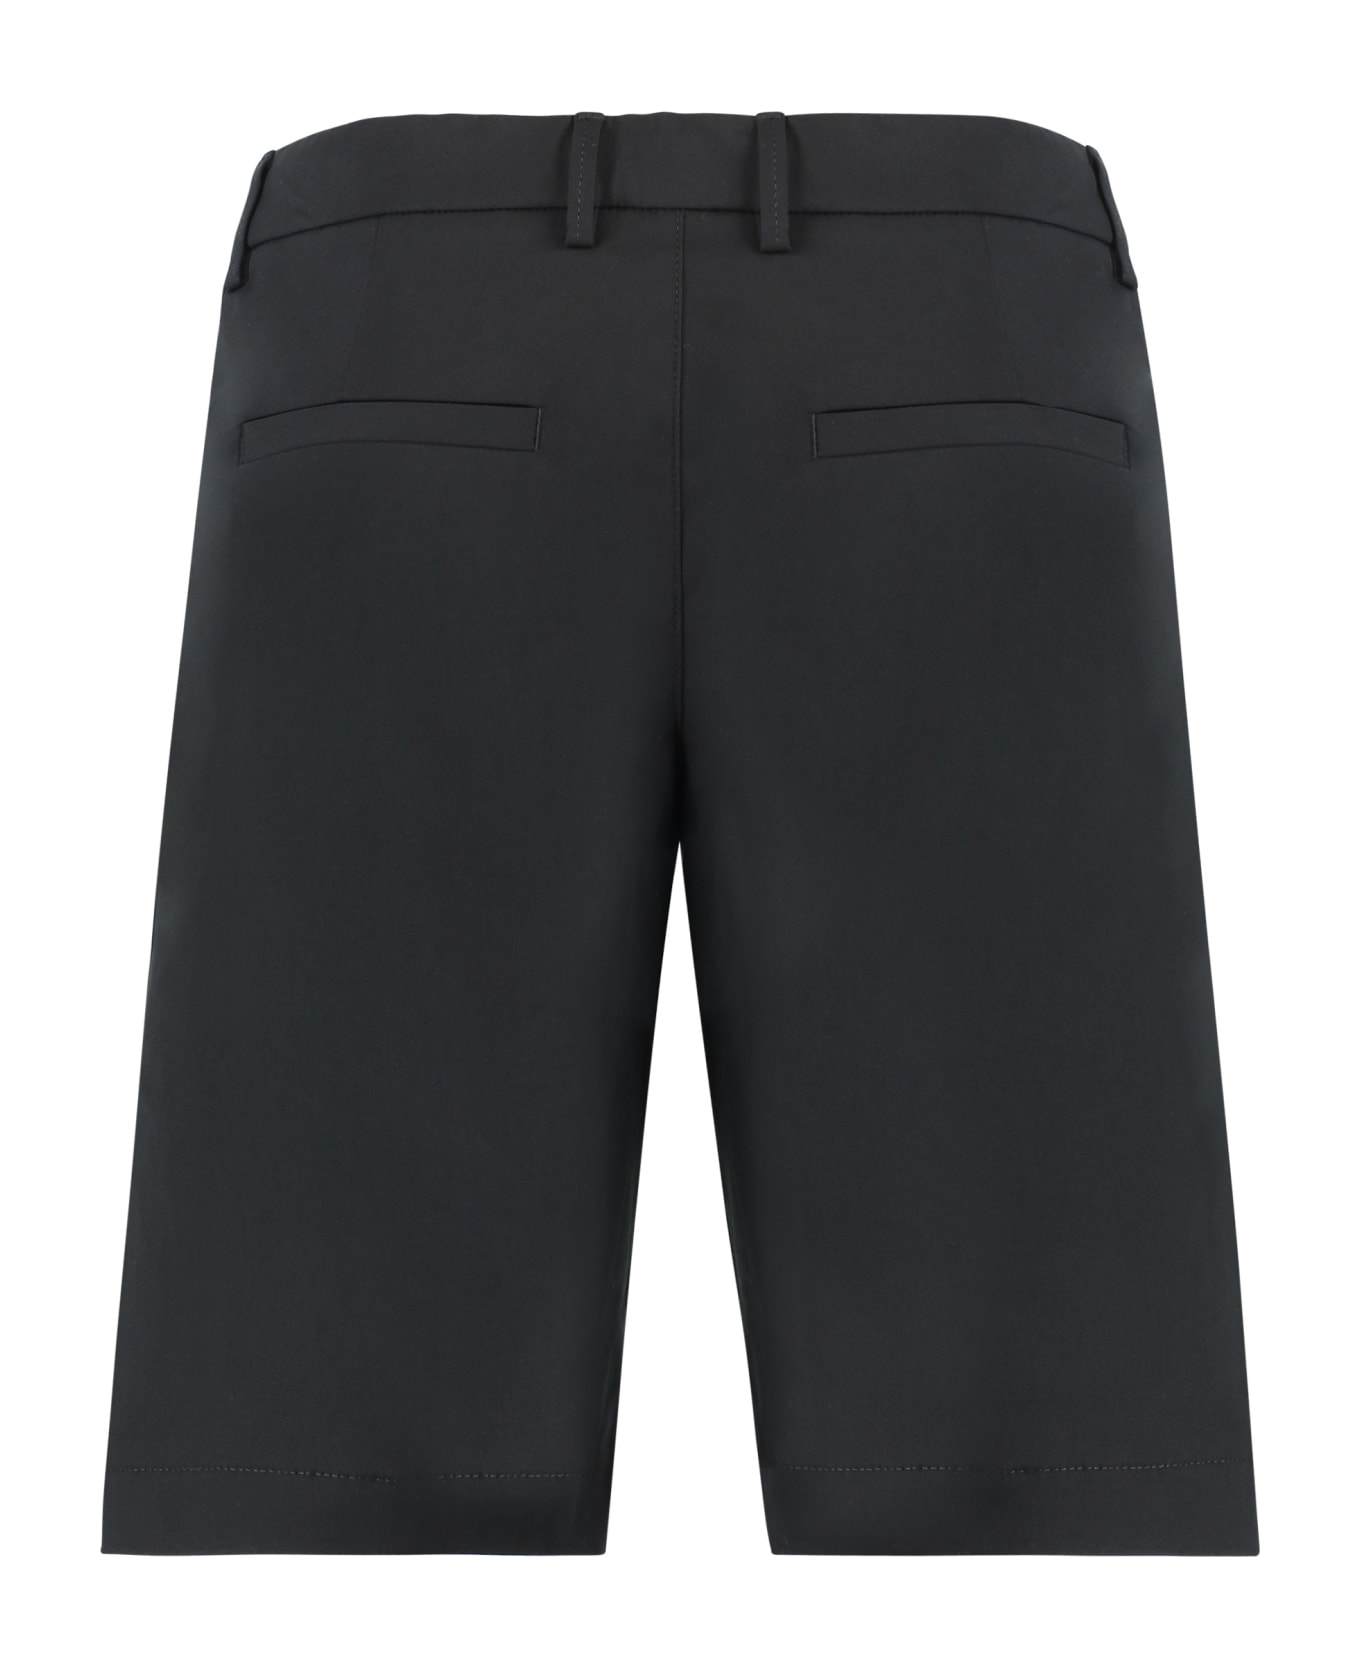 Hugo Boss Cotton Blend Bermuda Shorts - black